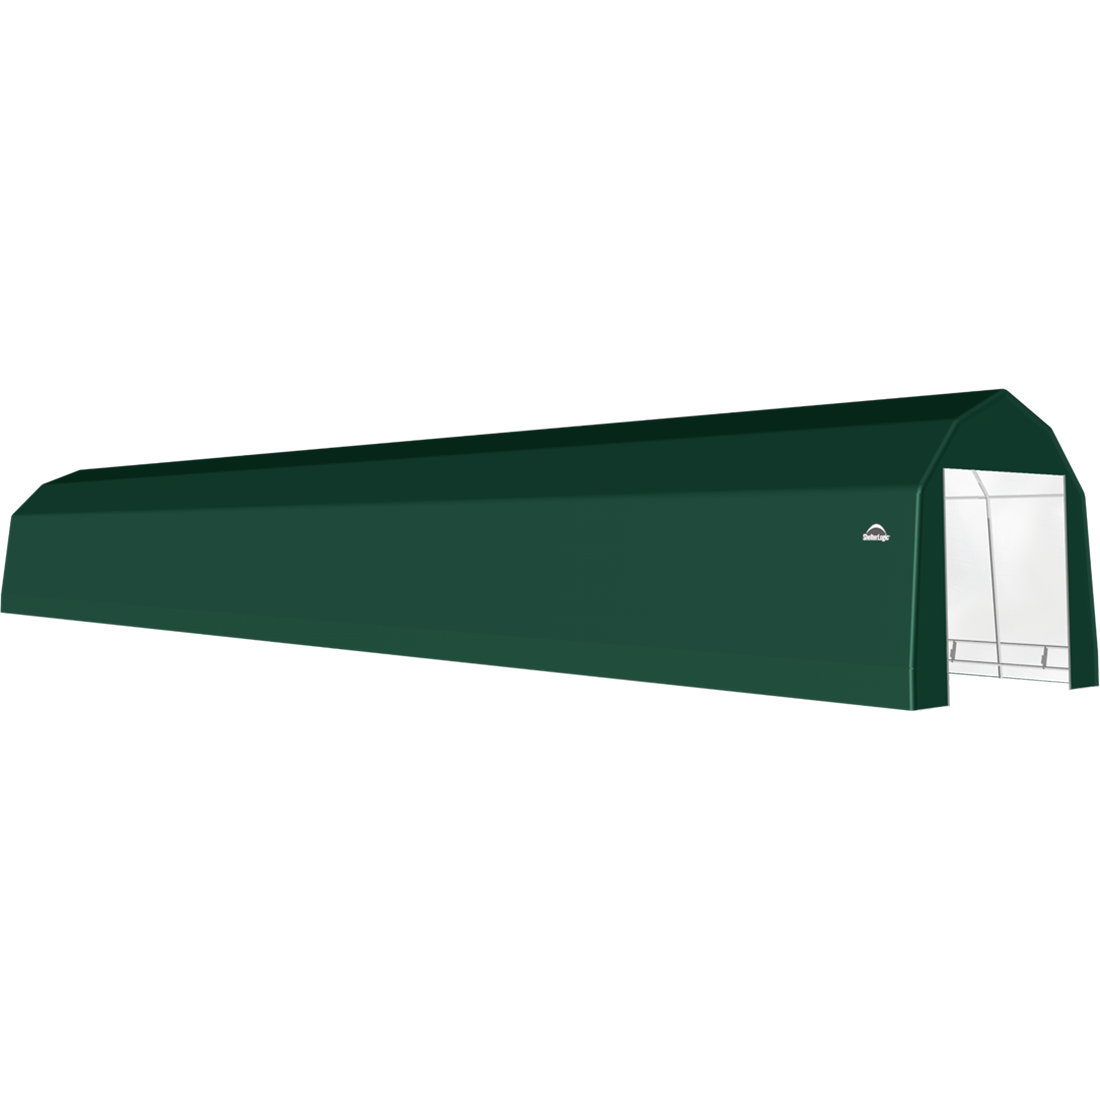 ShelterTech SP Series Barn Shelter, 12 ft. x 84 ft. x 11 ft. Heavy Duty PVC 14.5 oz. Green